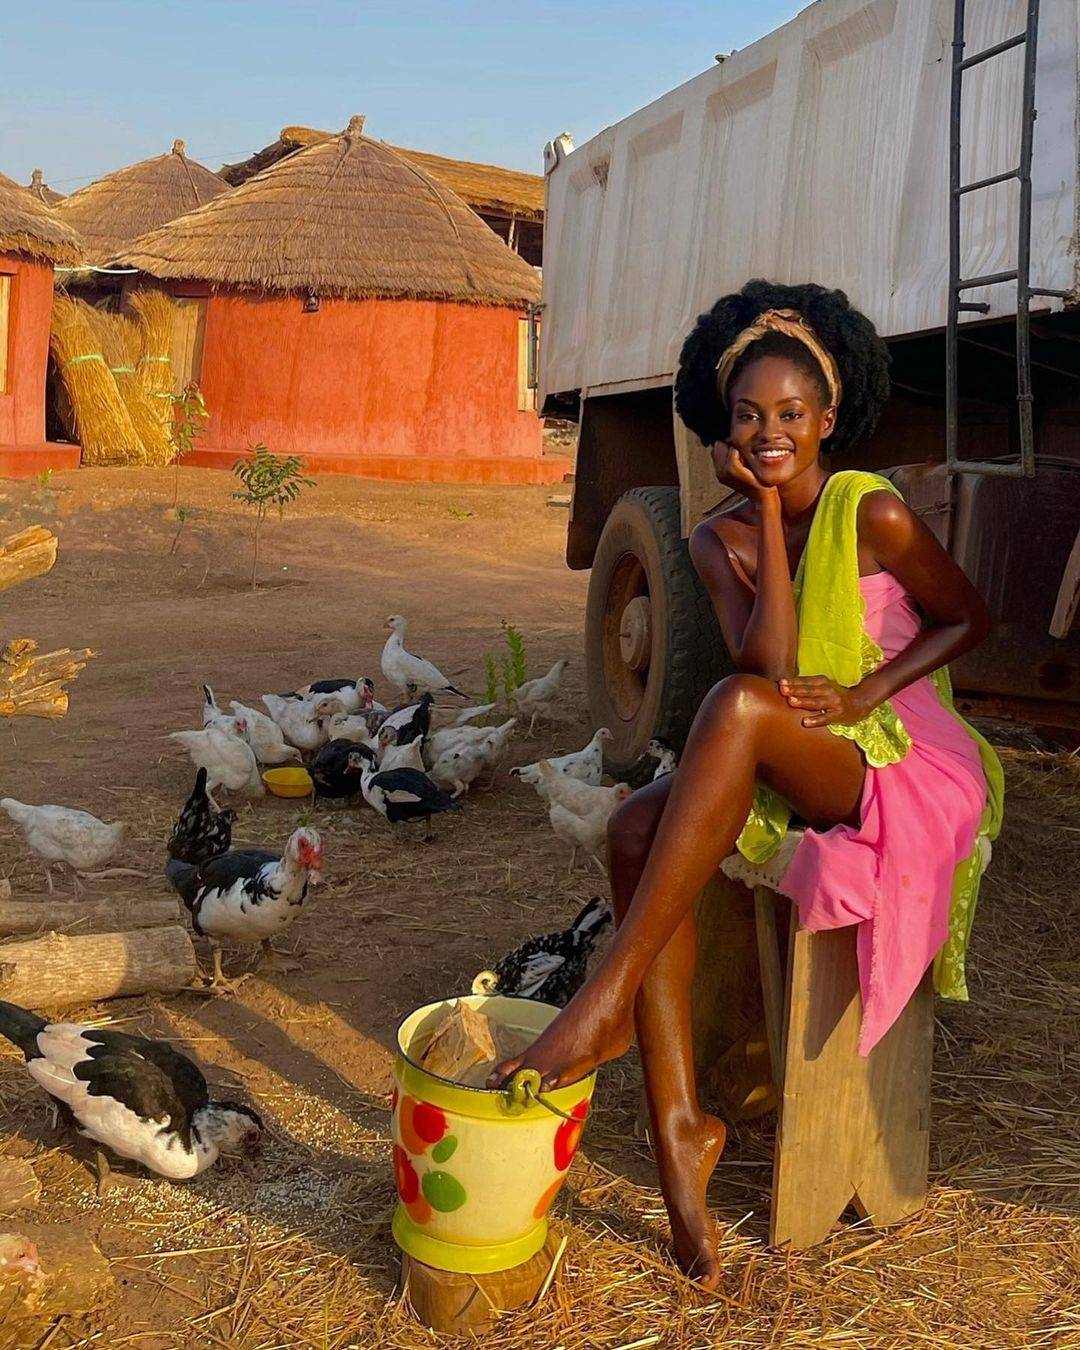 Misica ostavila luksuzan život i vratila se na selo: Pokrenula biznis od nule, prodaje maslac